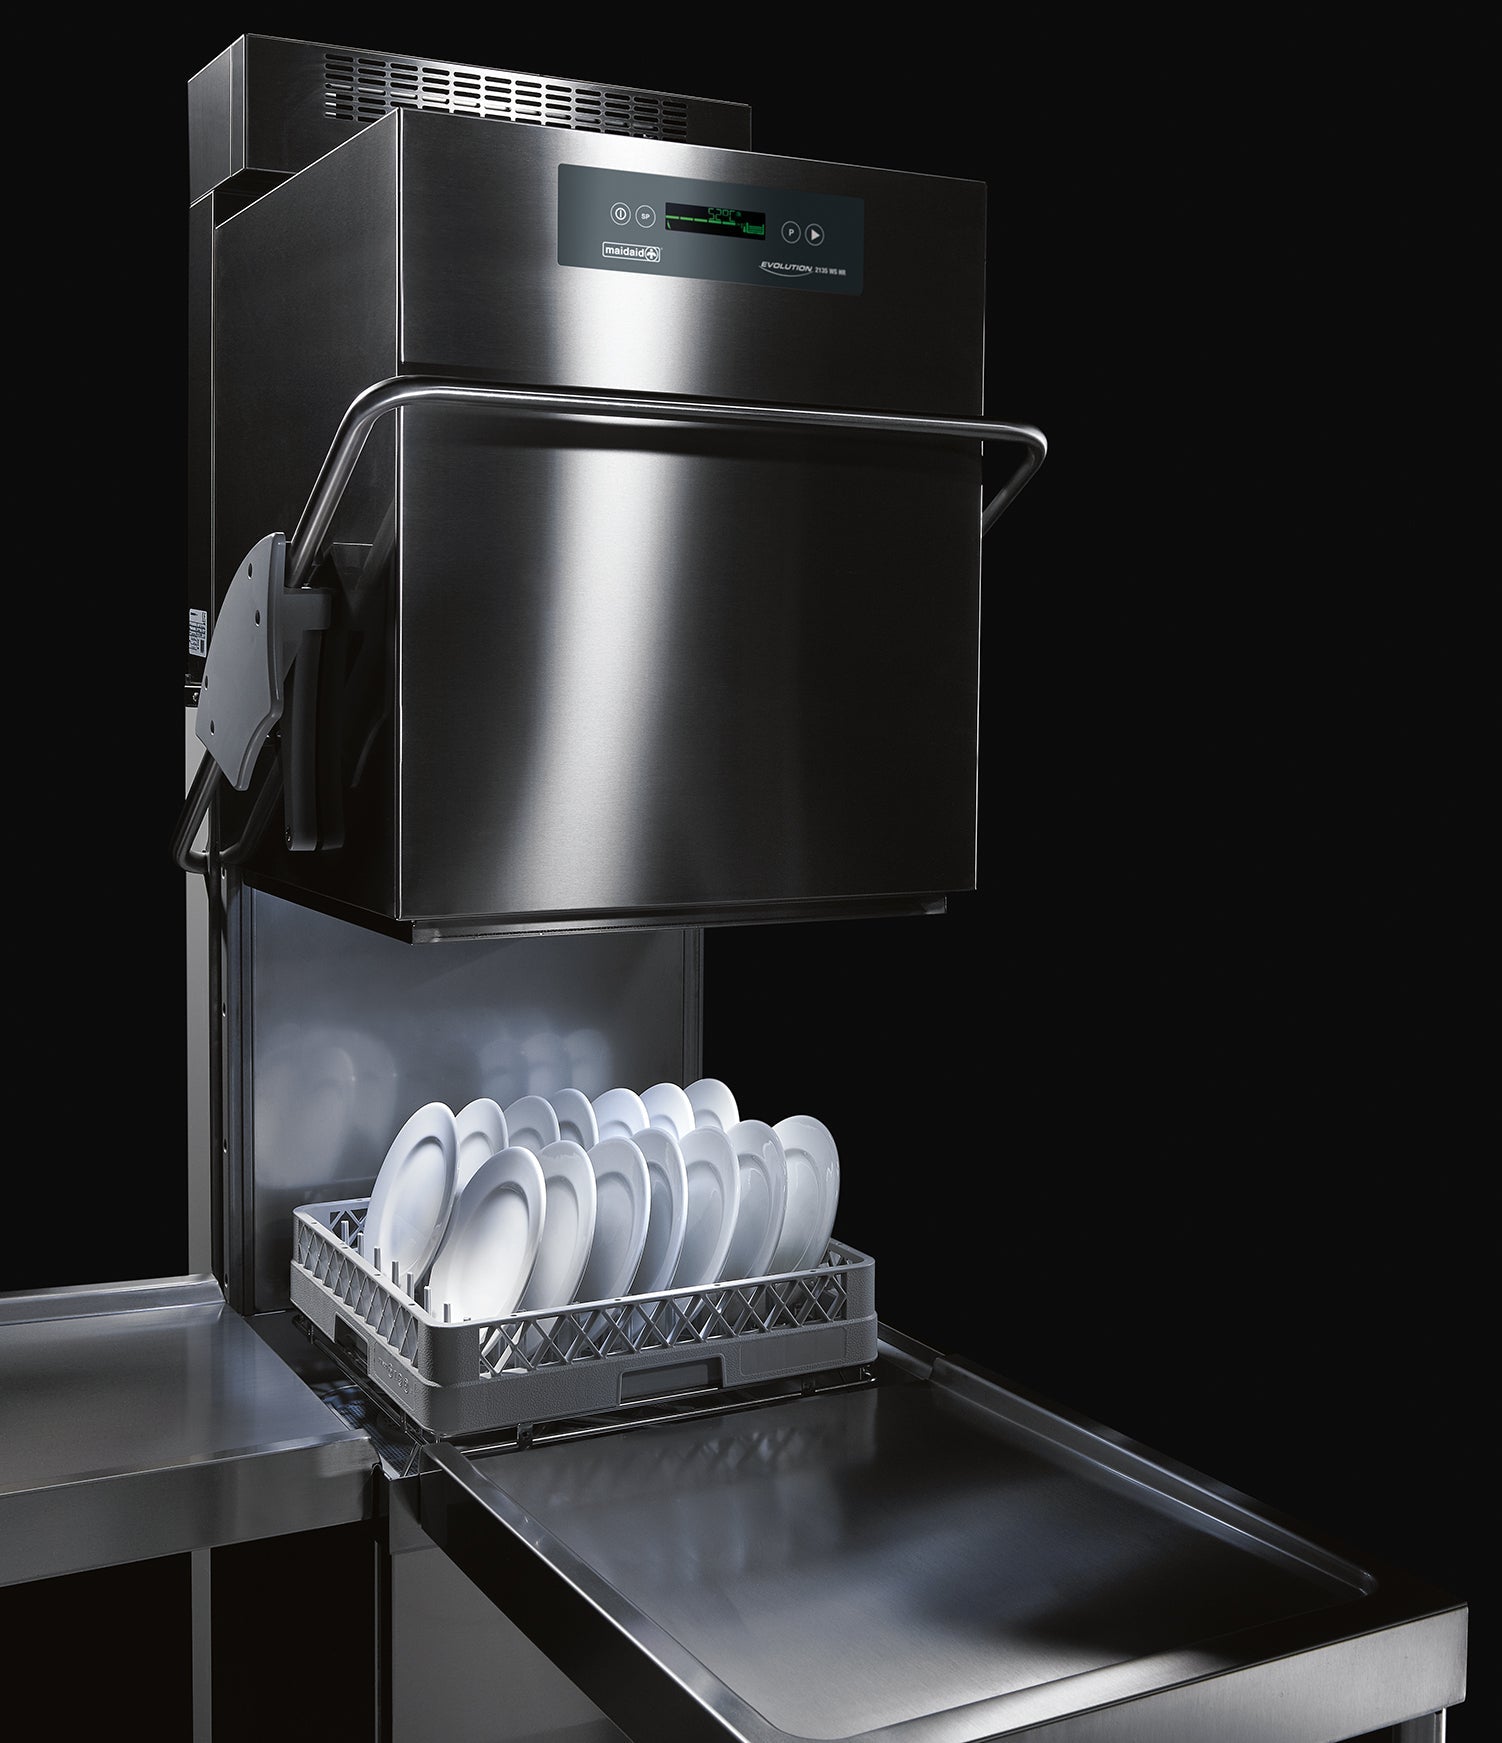 Maidaid EVO2135WS/HR Pass Through Dishwasher JD Catering Equipment Solutions Ltd